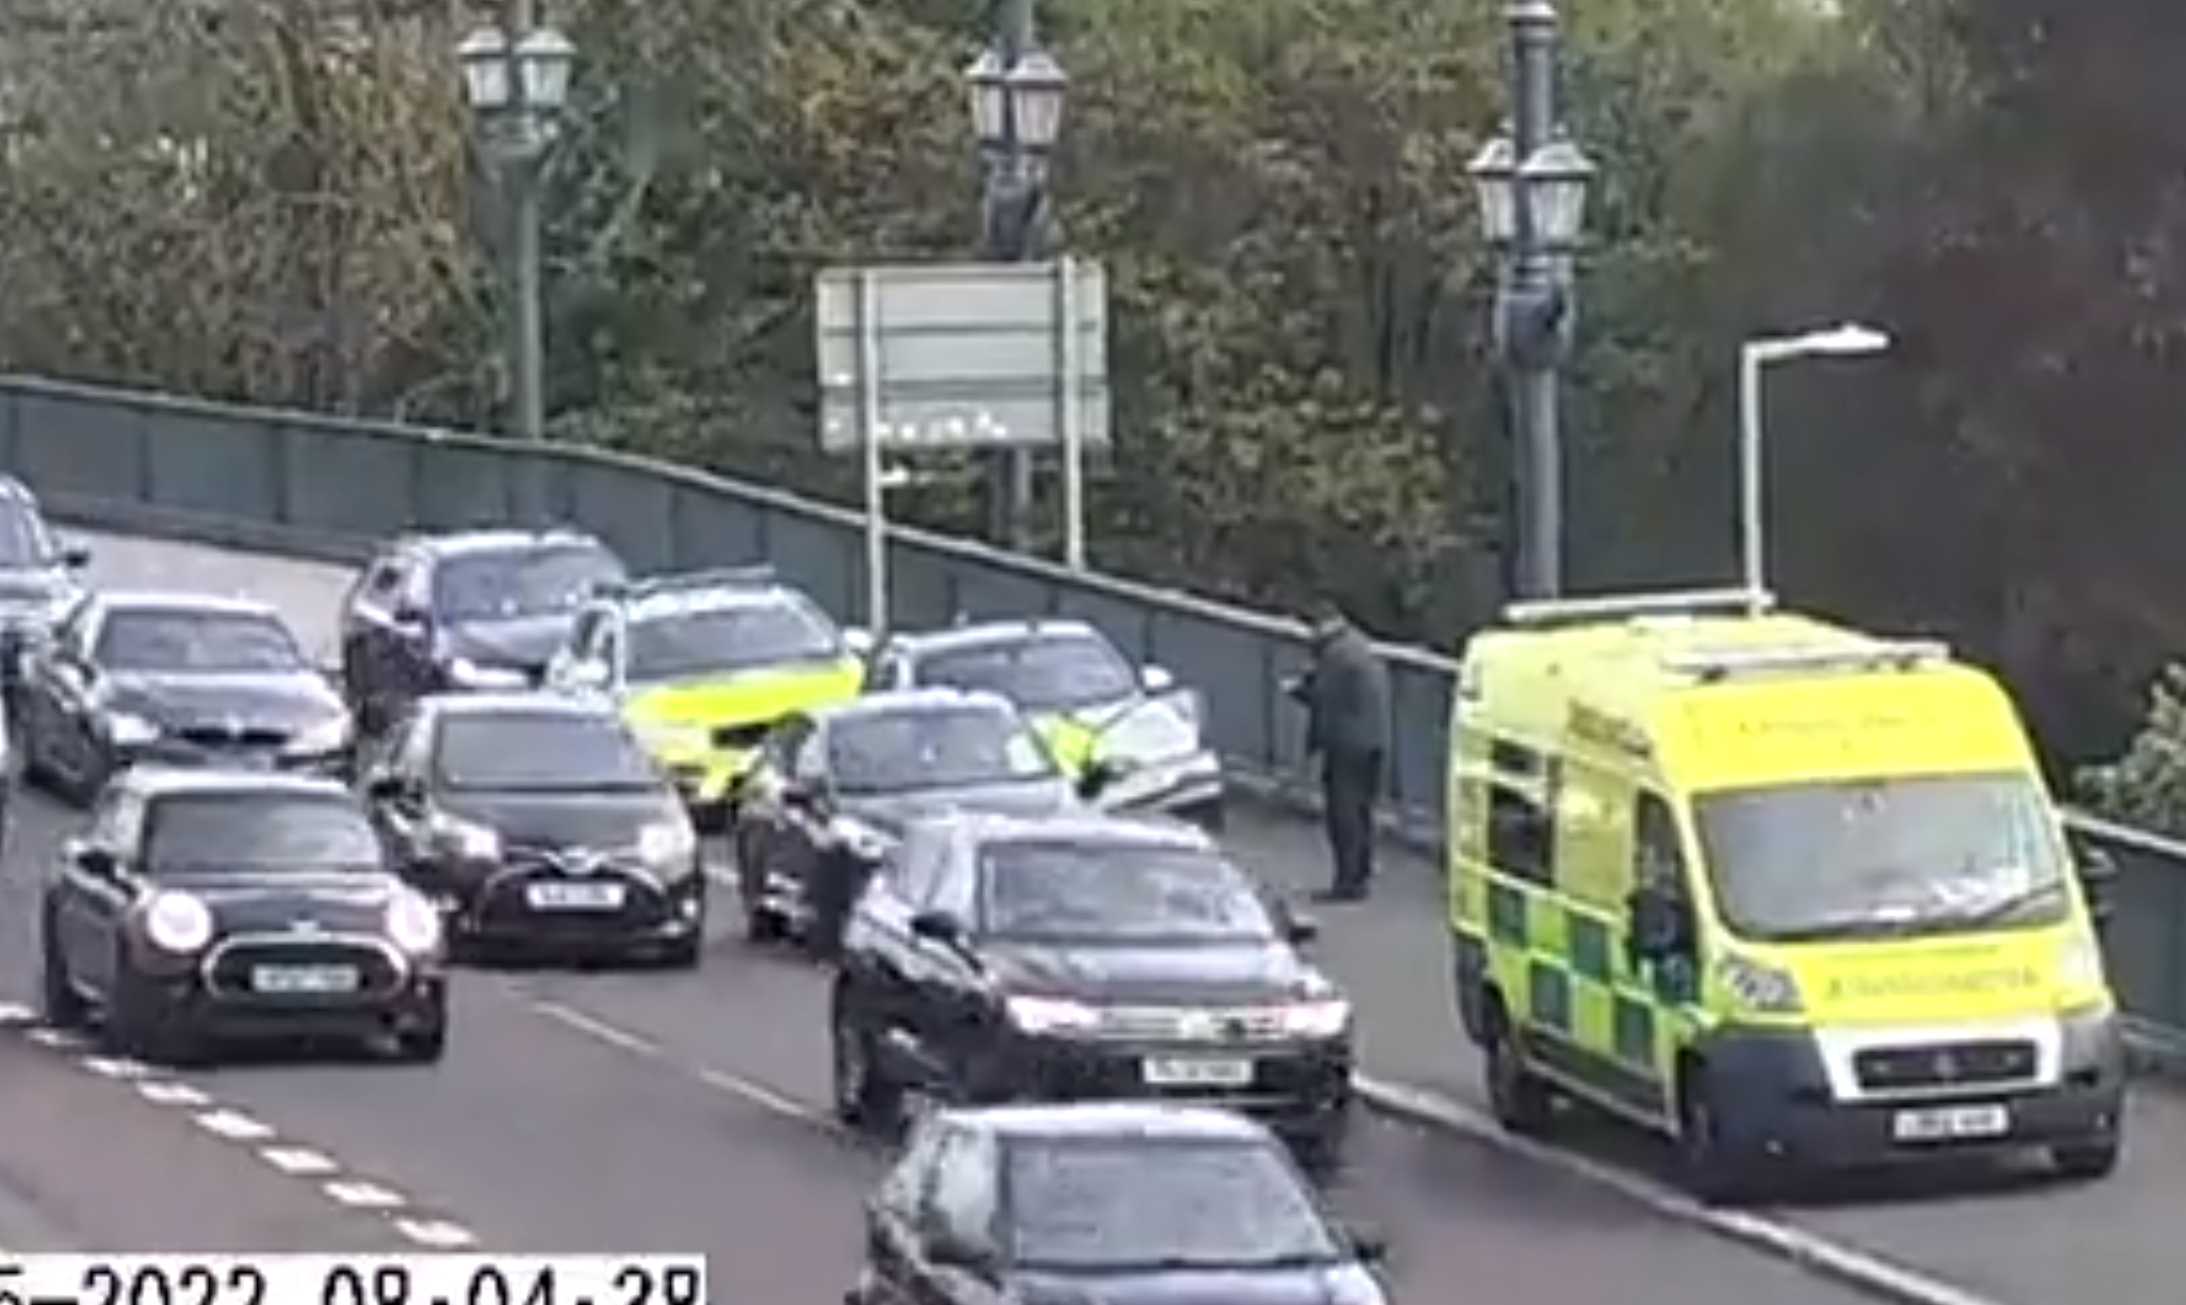 Emergency services deal with crash on A167 on Tyne Bridge - Recap